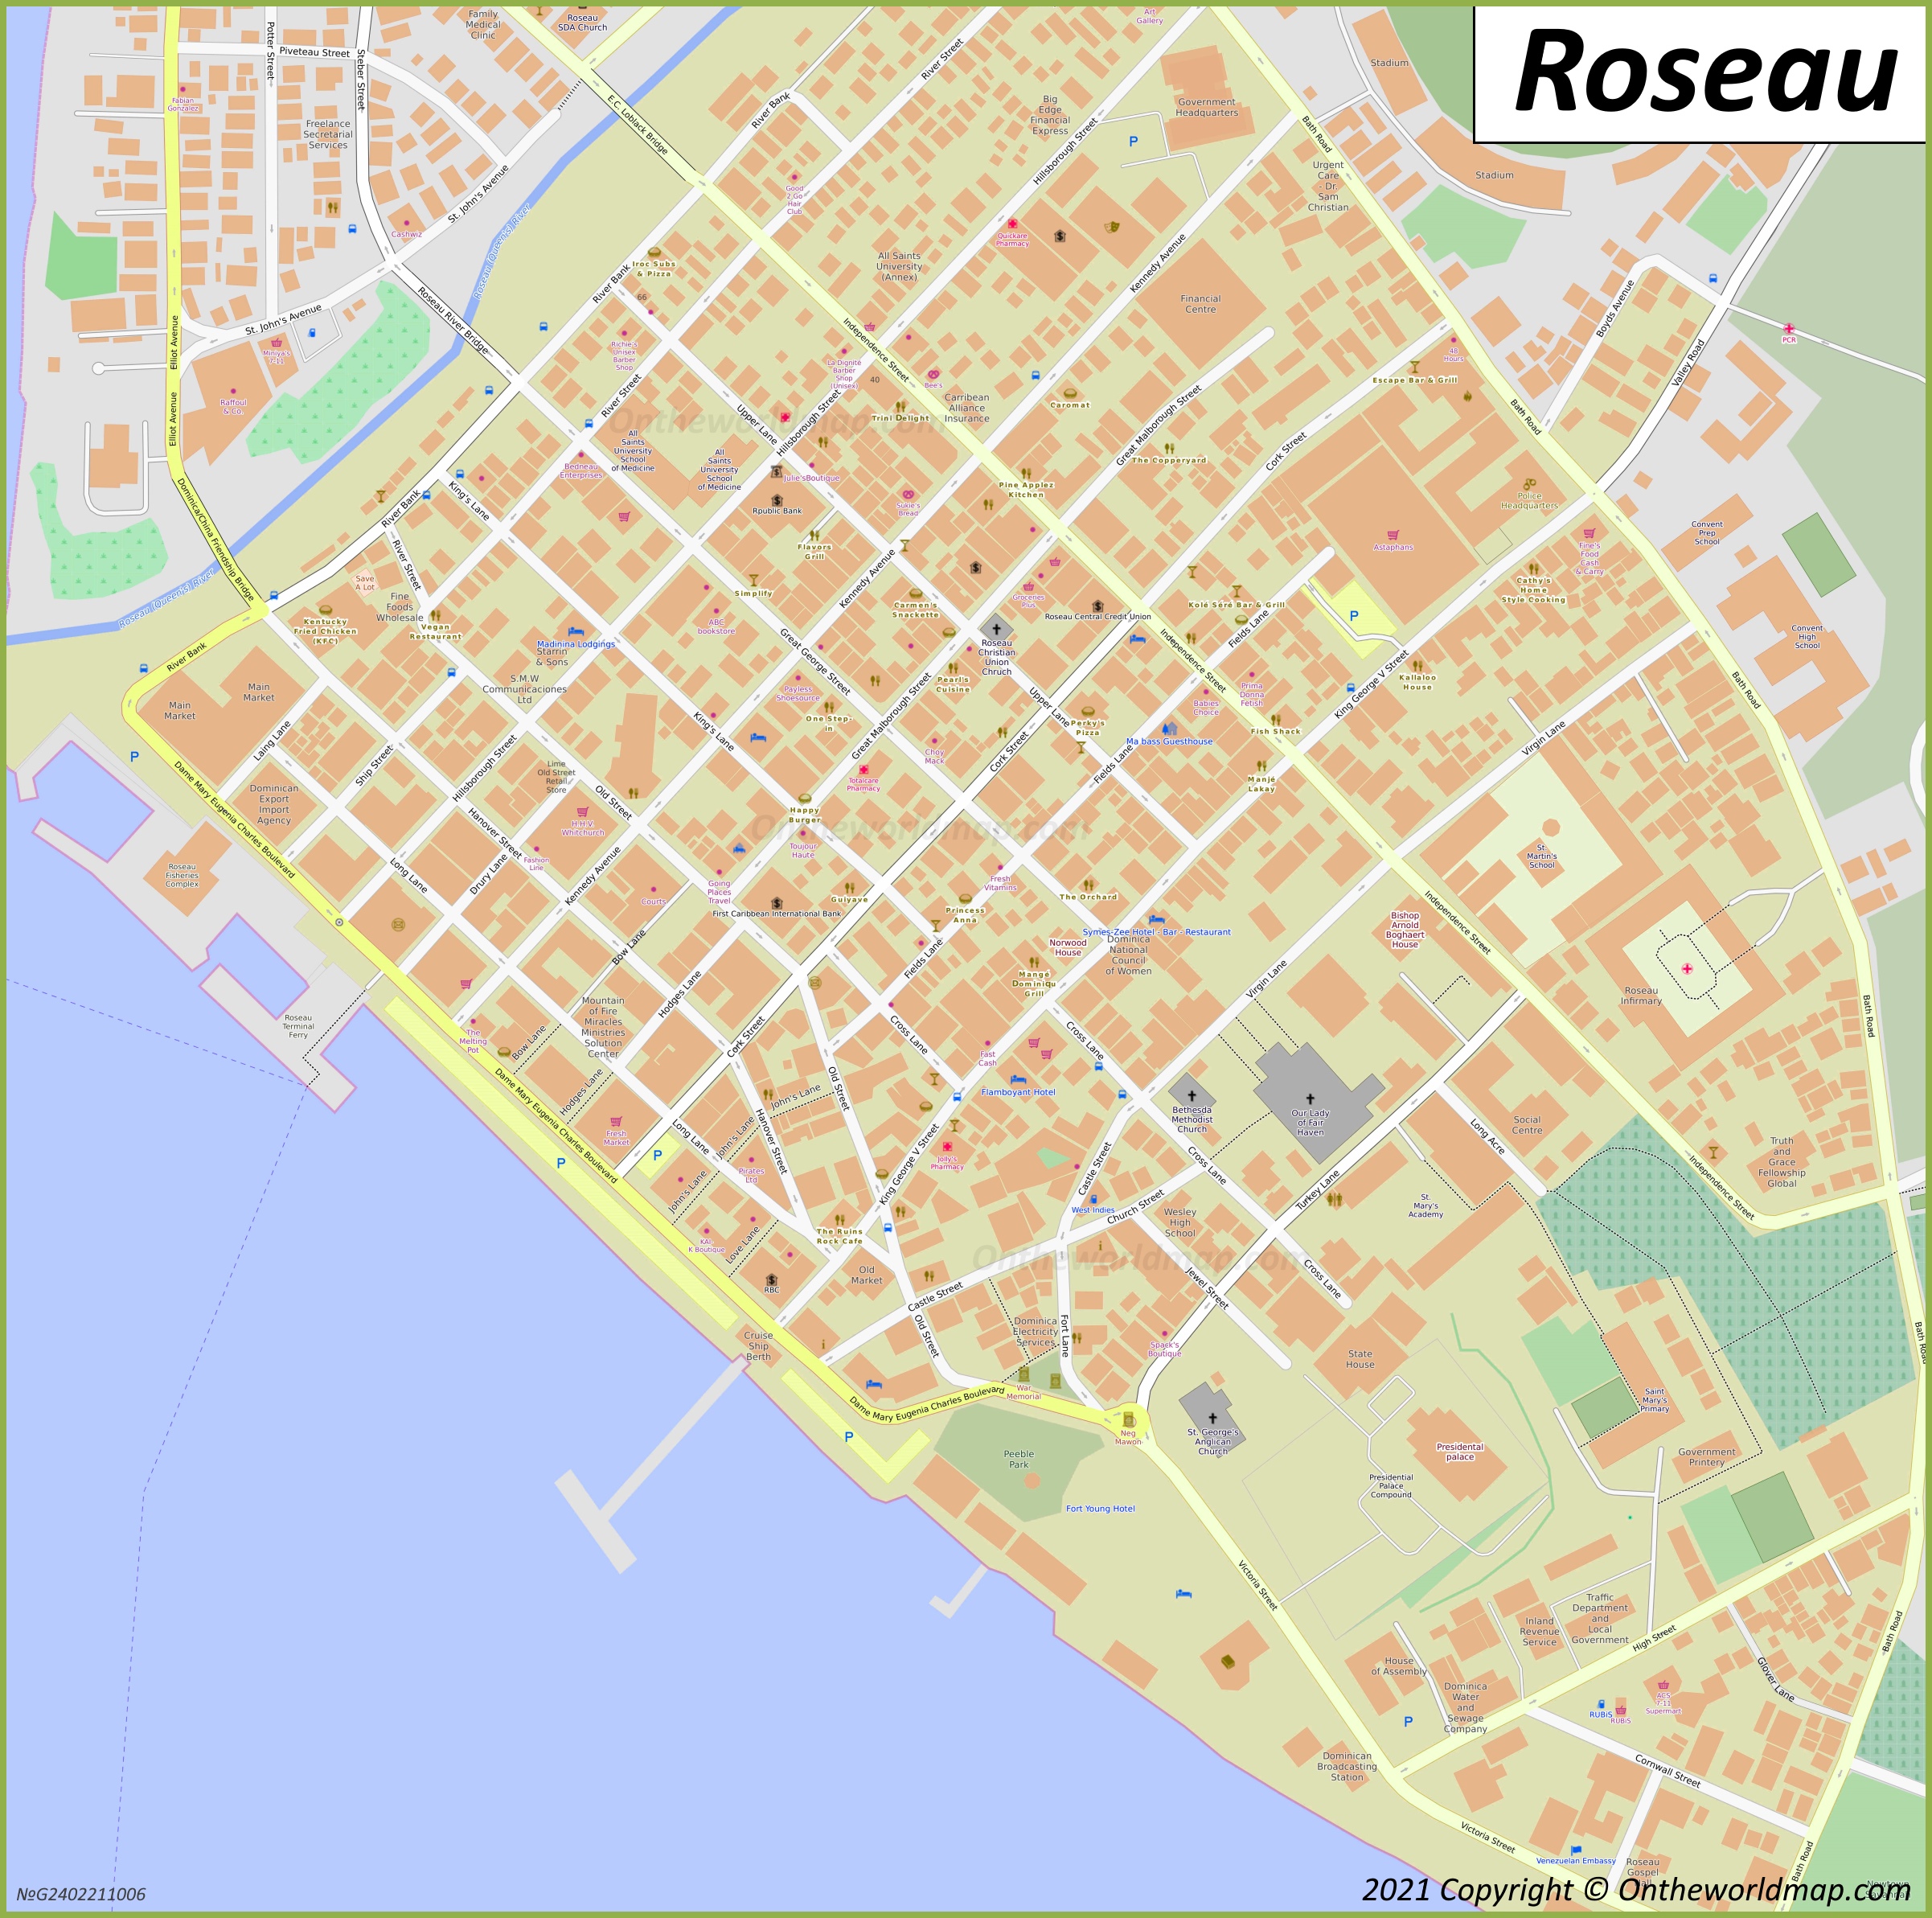 Roseau City Center Map